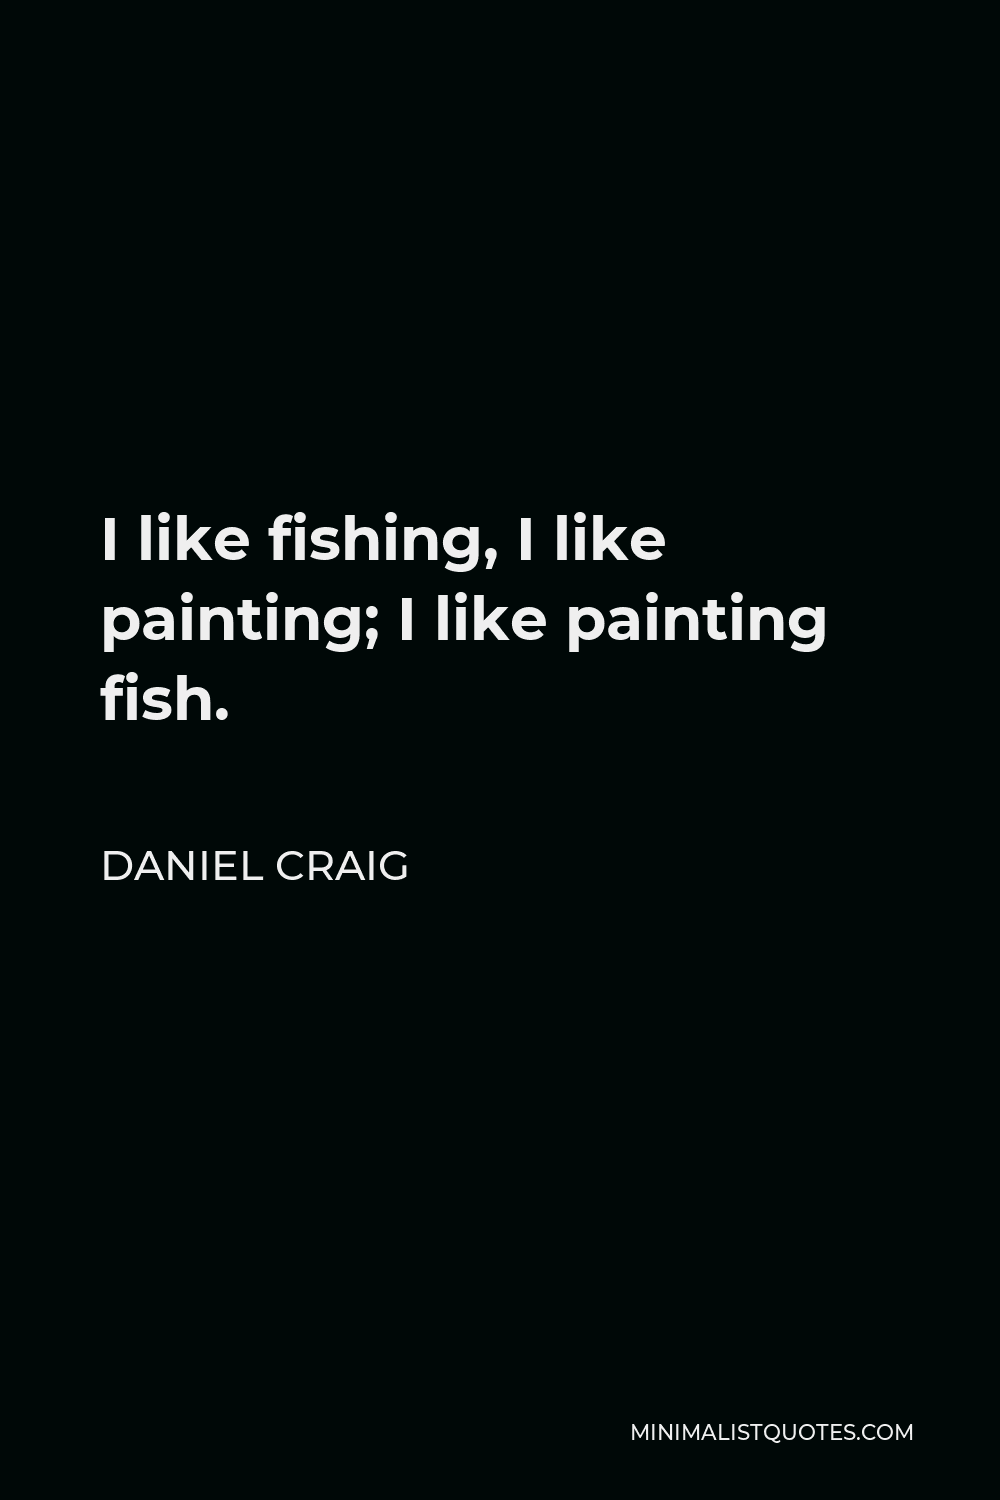 Daniel Craig Quote - I like fishing, I like painting; I like painting fish.